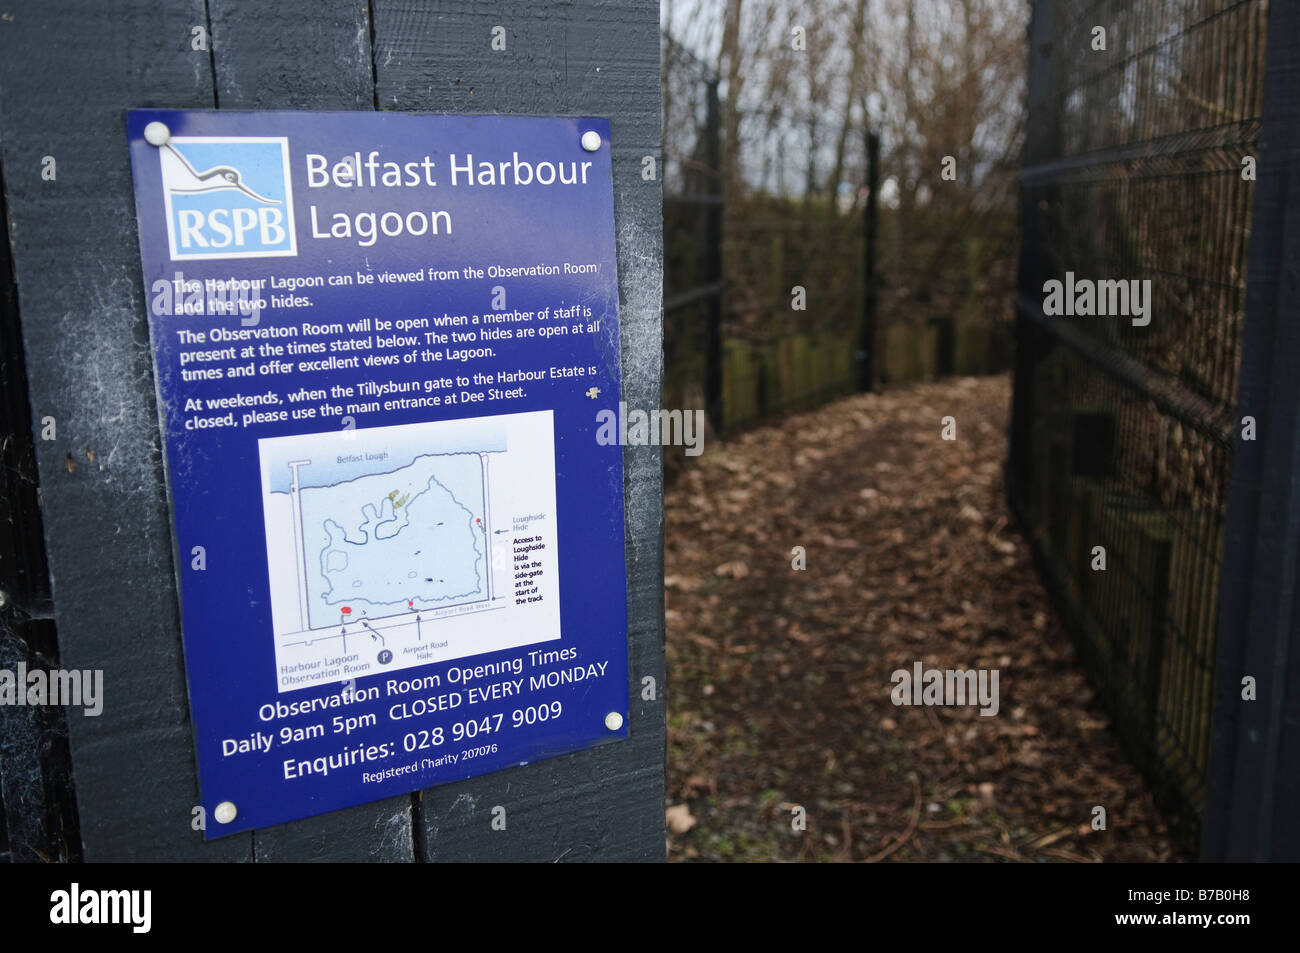 Firmar en la entrada de pájaros en la reserva RSPB, Laguna de Belfast en Belfast Lough. Foto de stock